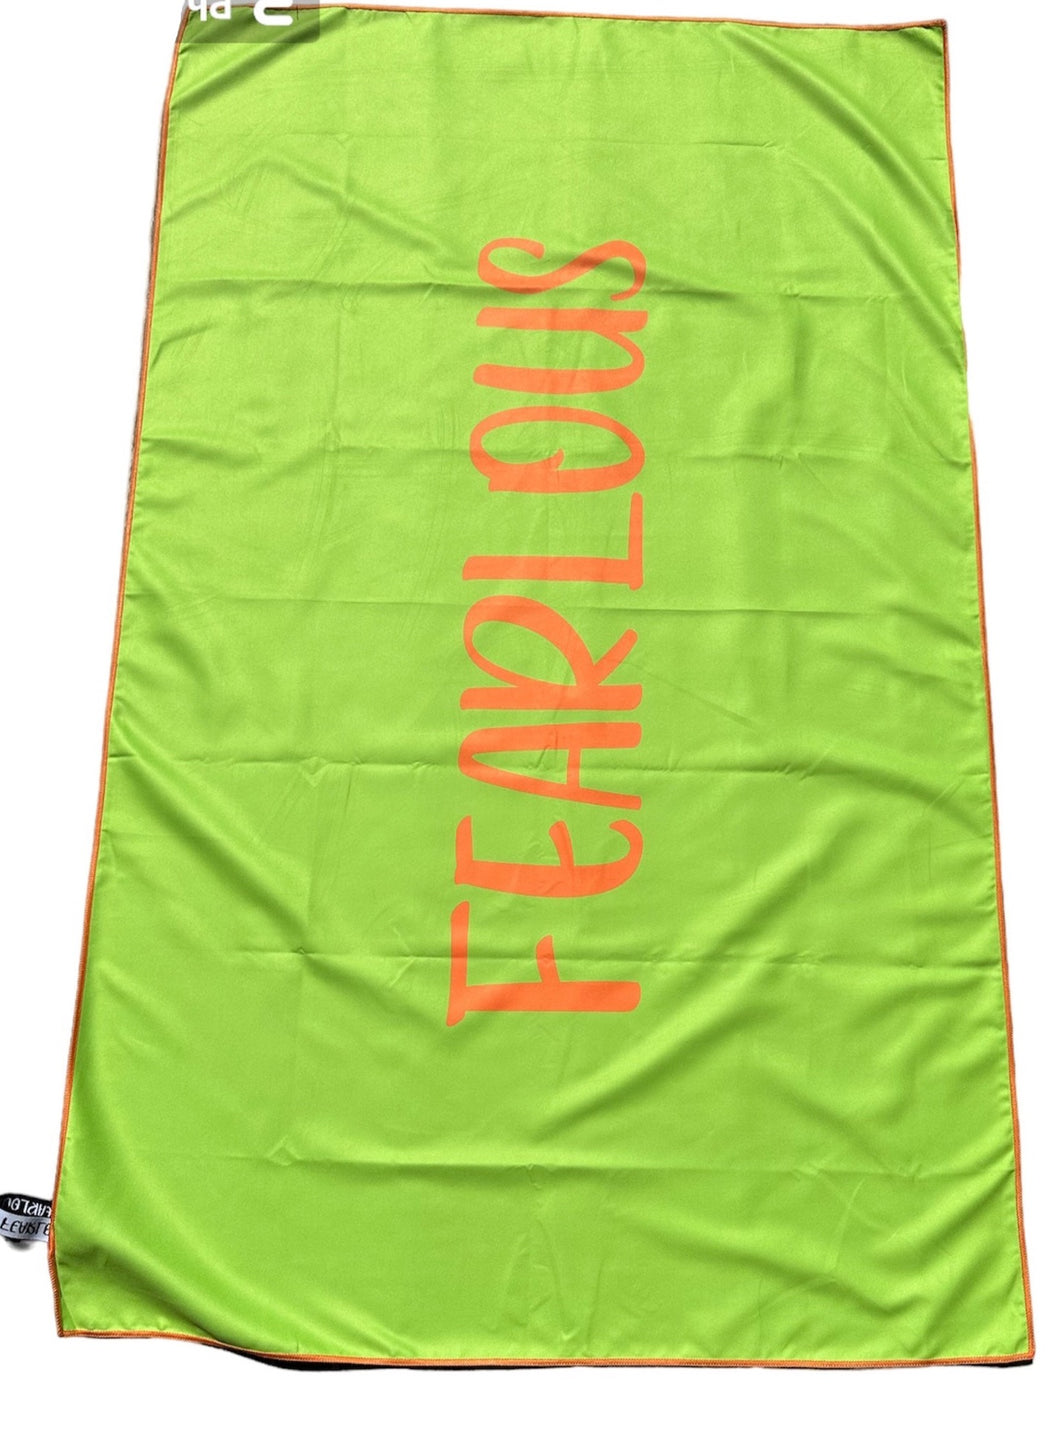 FEARLOUS Micro Fibre Towel - Lime Green / Orange